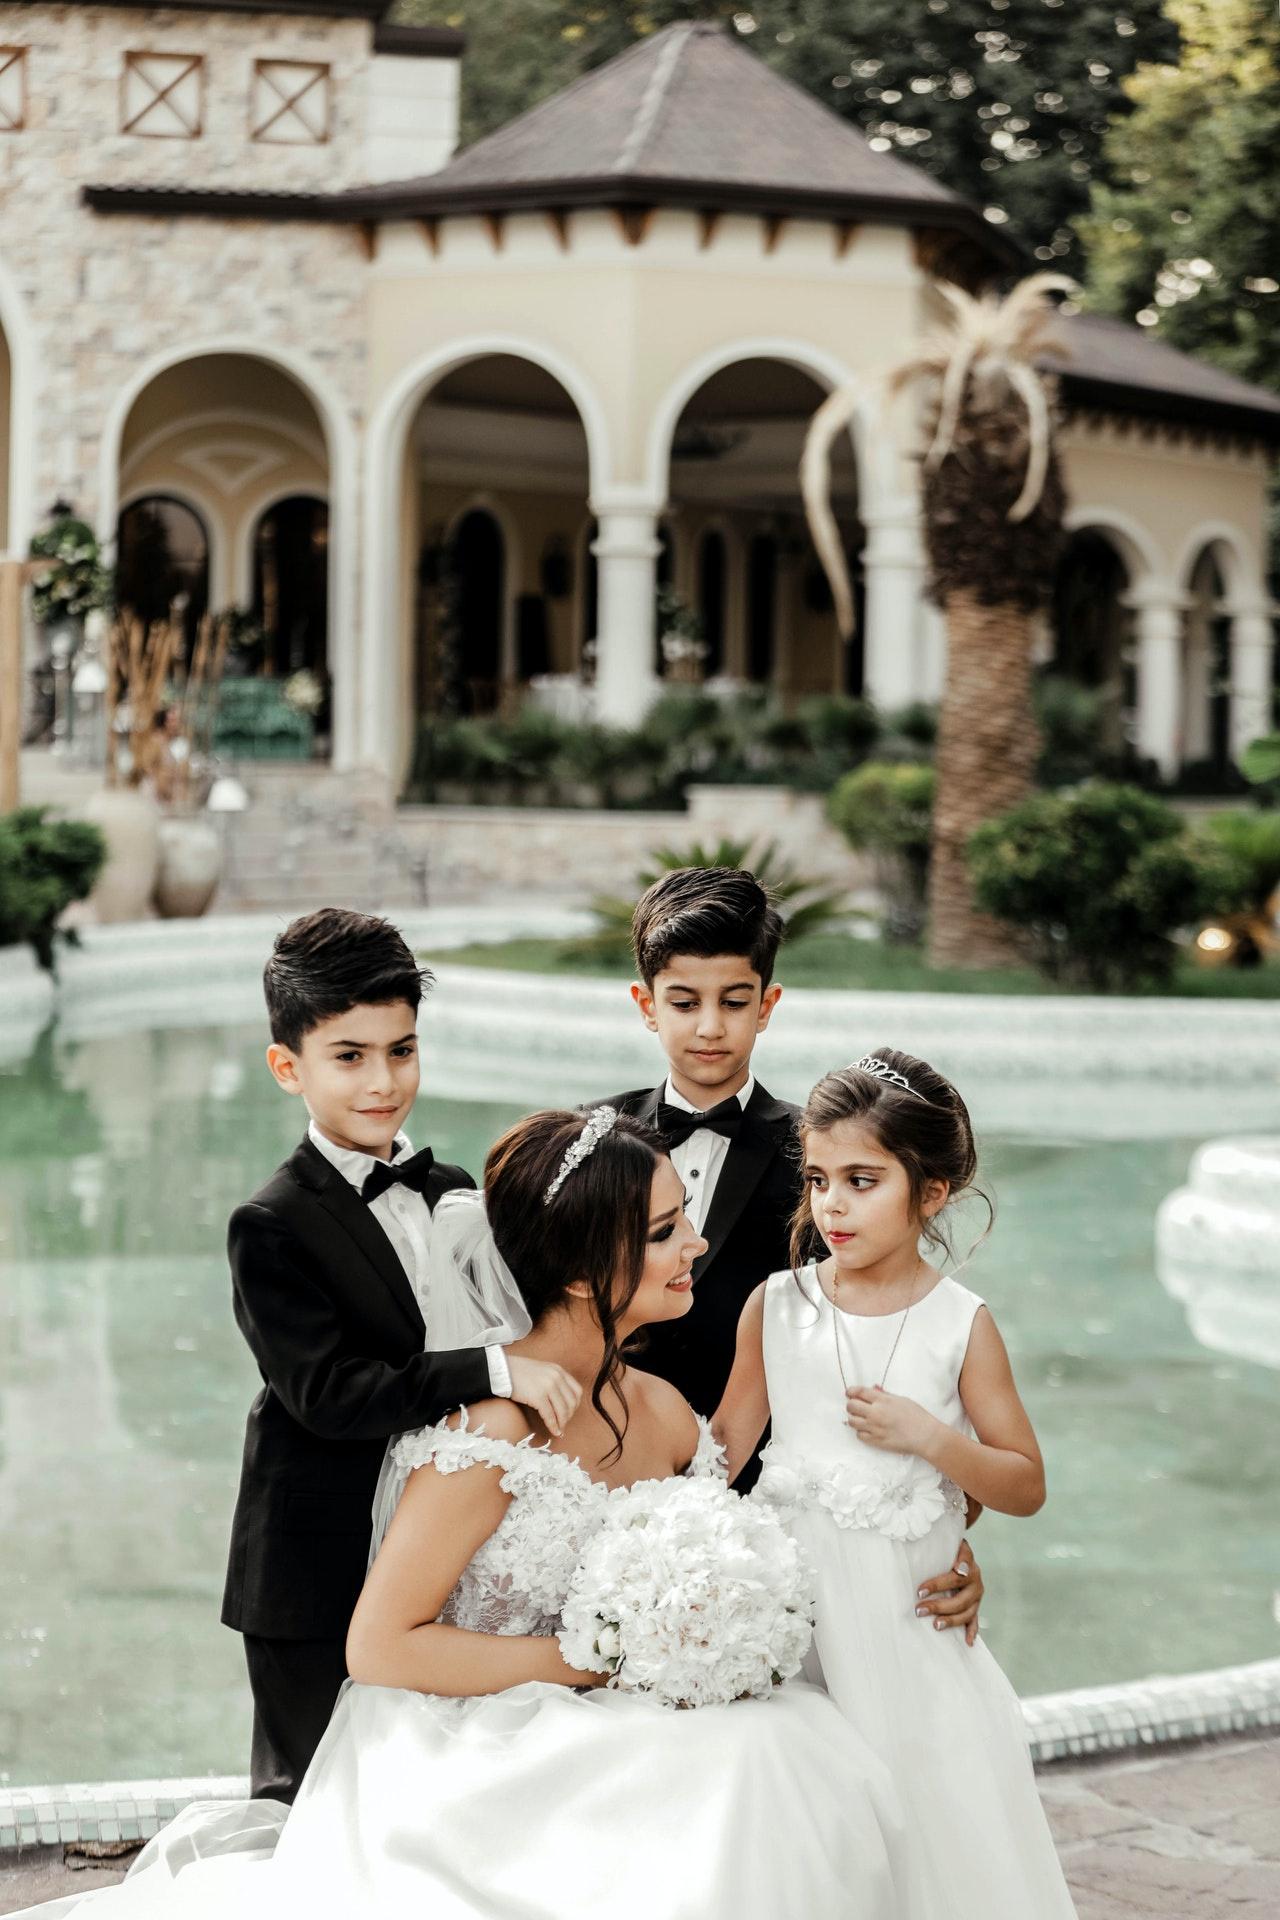 https://cdn0.hitched.co.uk/article/3758/original/1280/jpg/68573-children-at-wedding-with-bride.jpeg